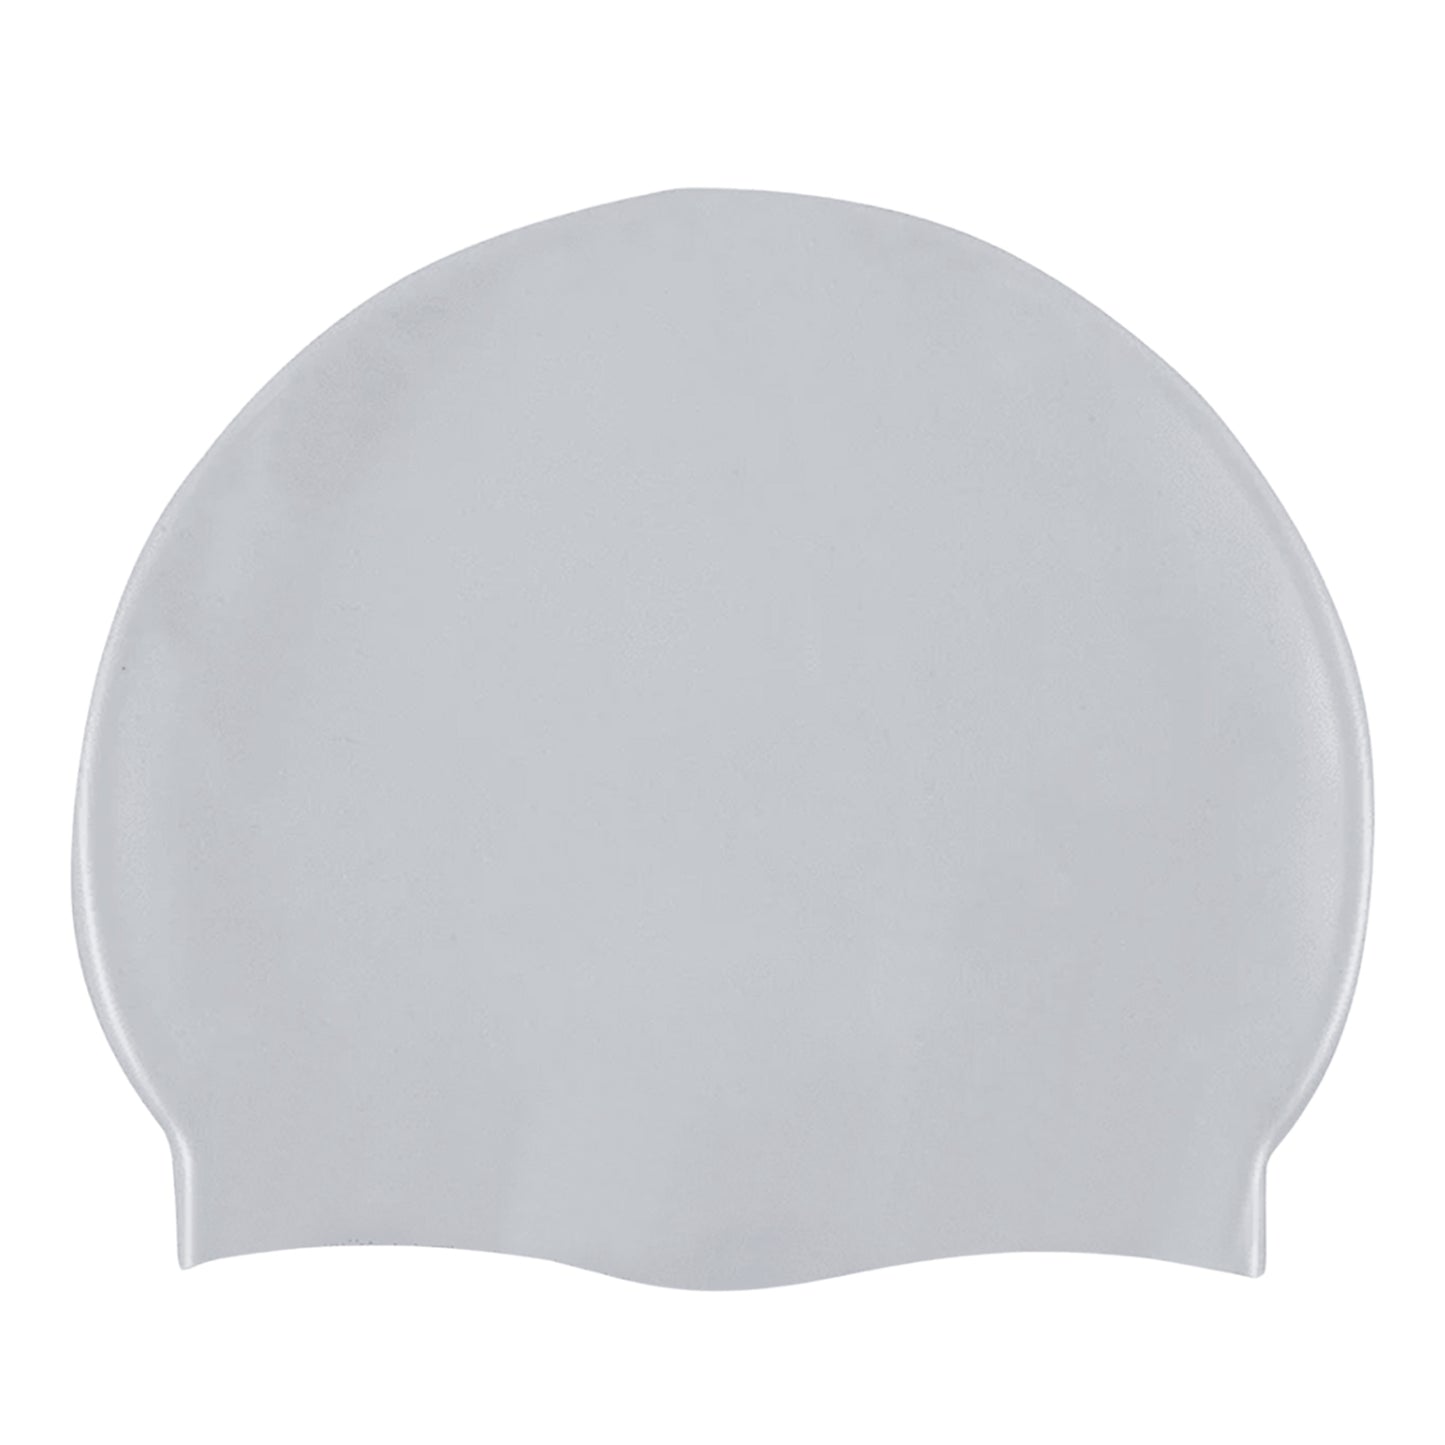 Prokick Silicone Swim Cap, One Size-Fits All - Best Price online Prokicksports.com